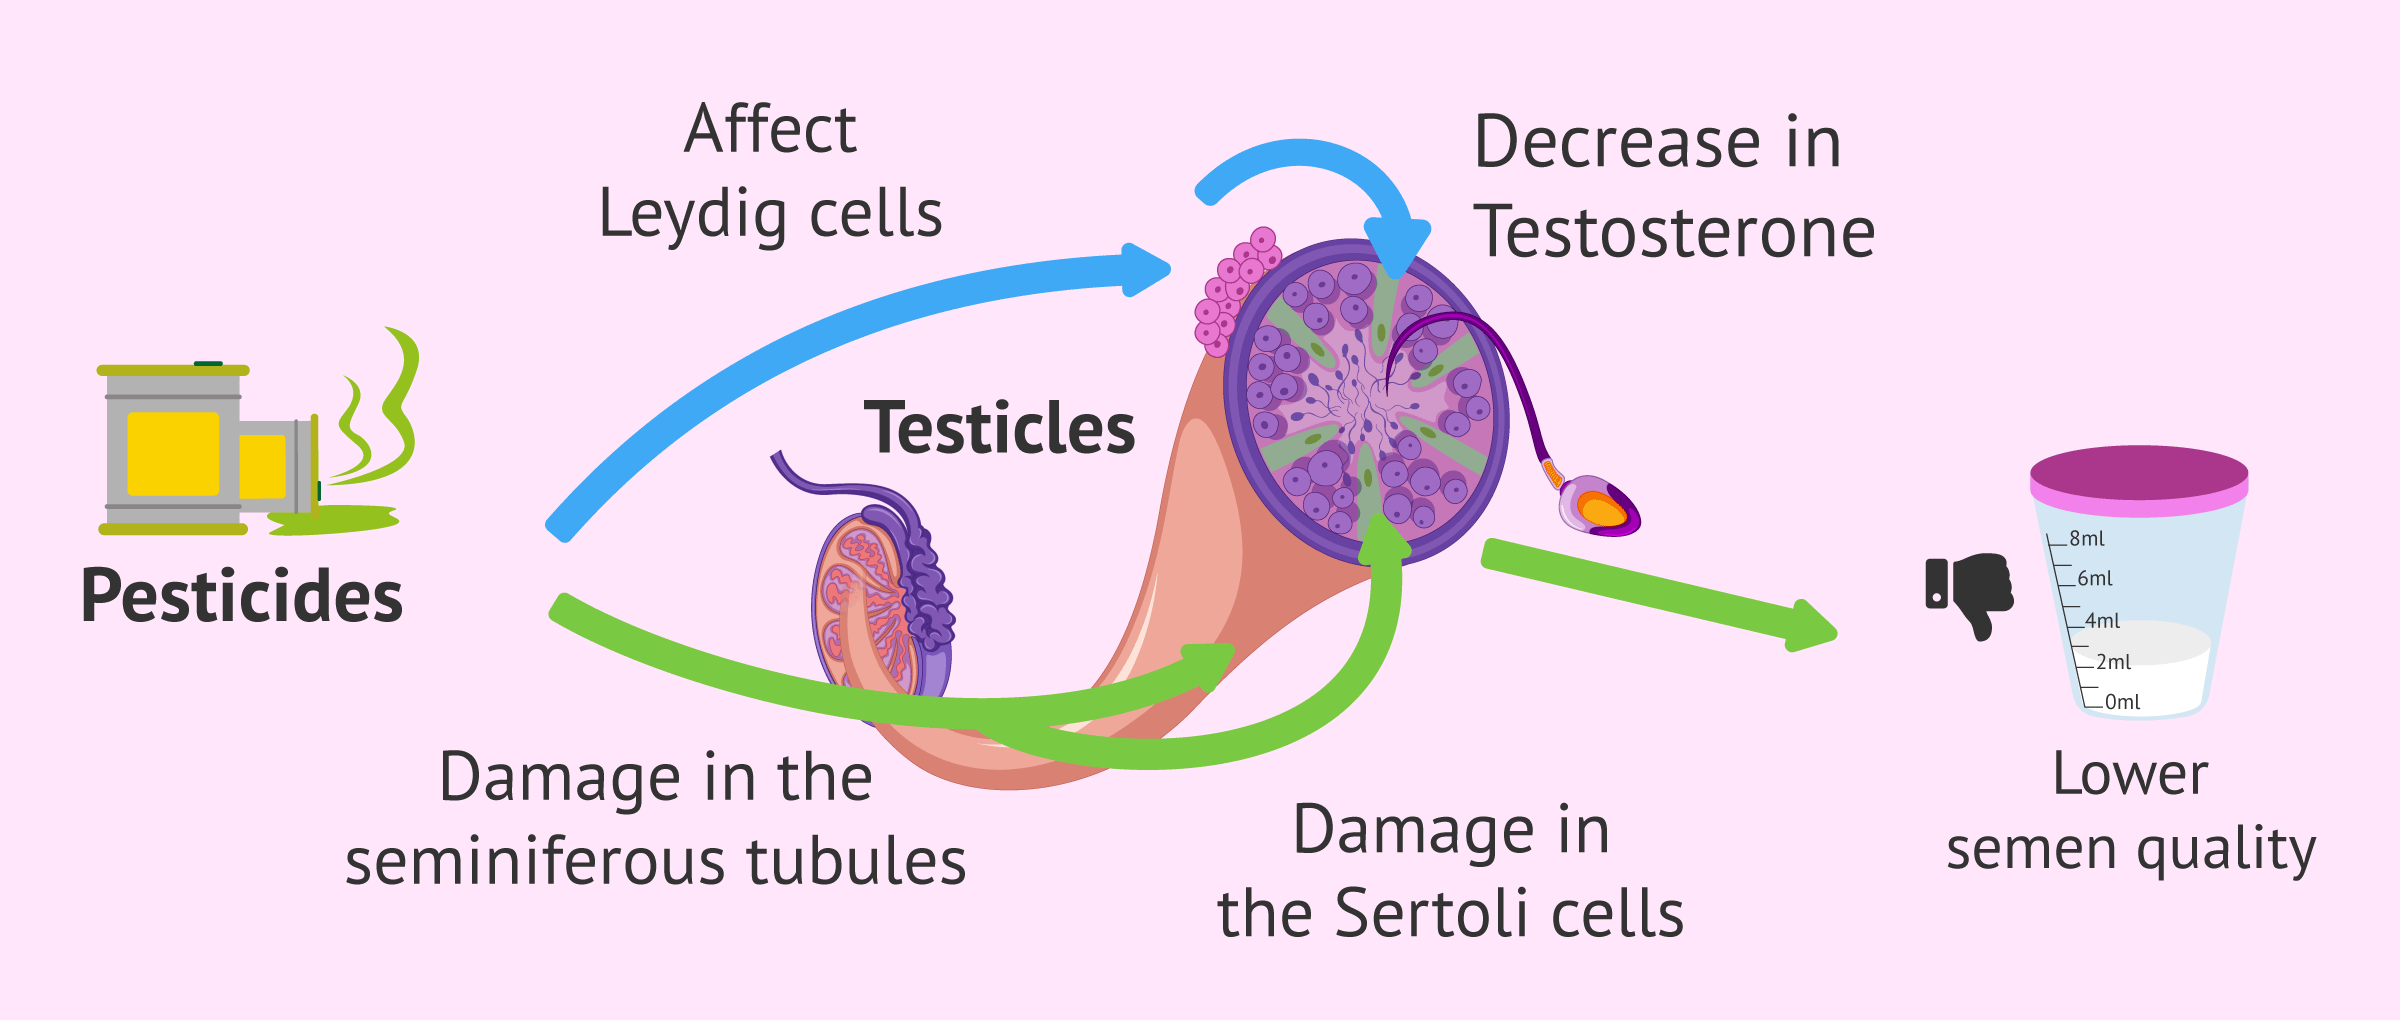 How do pesticides affect male fertility?